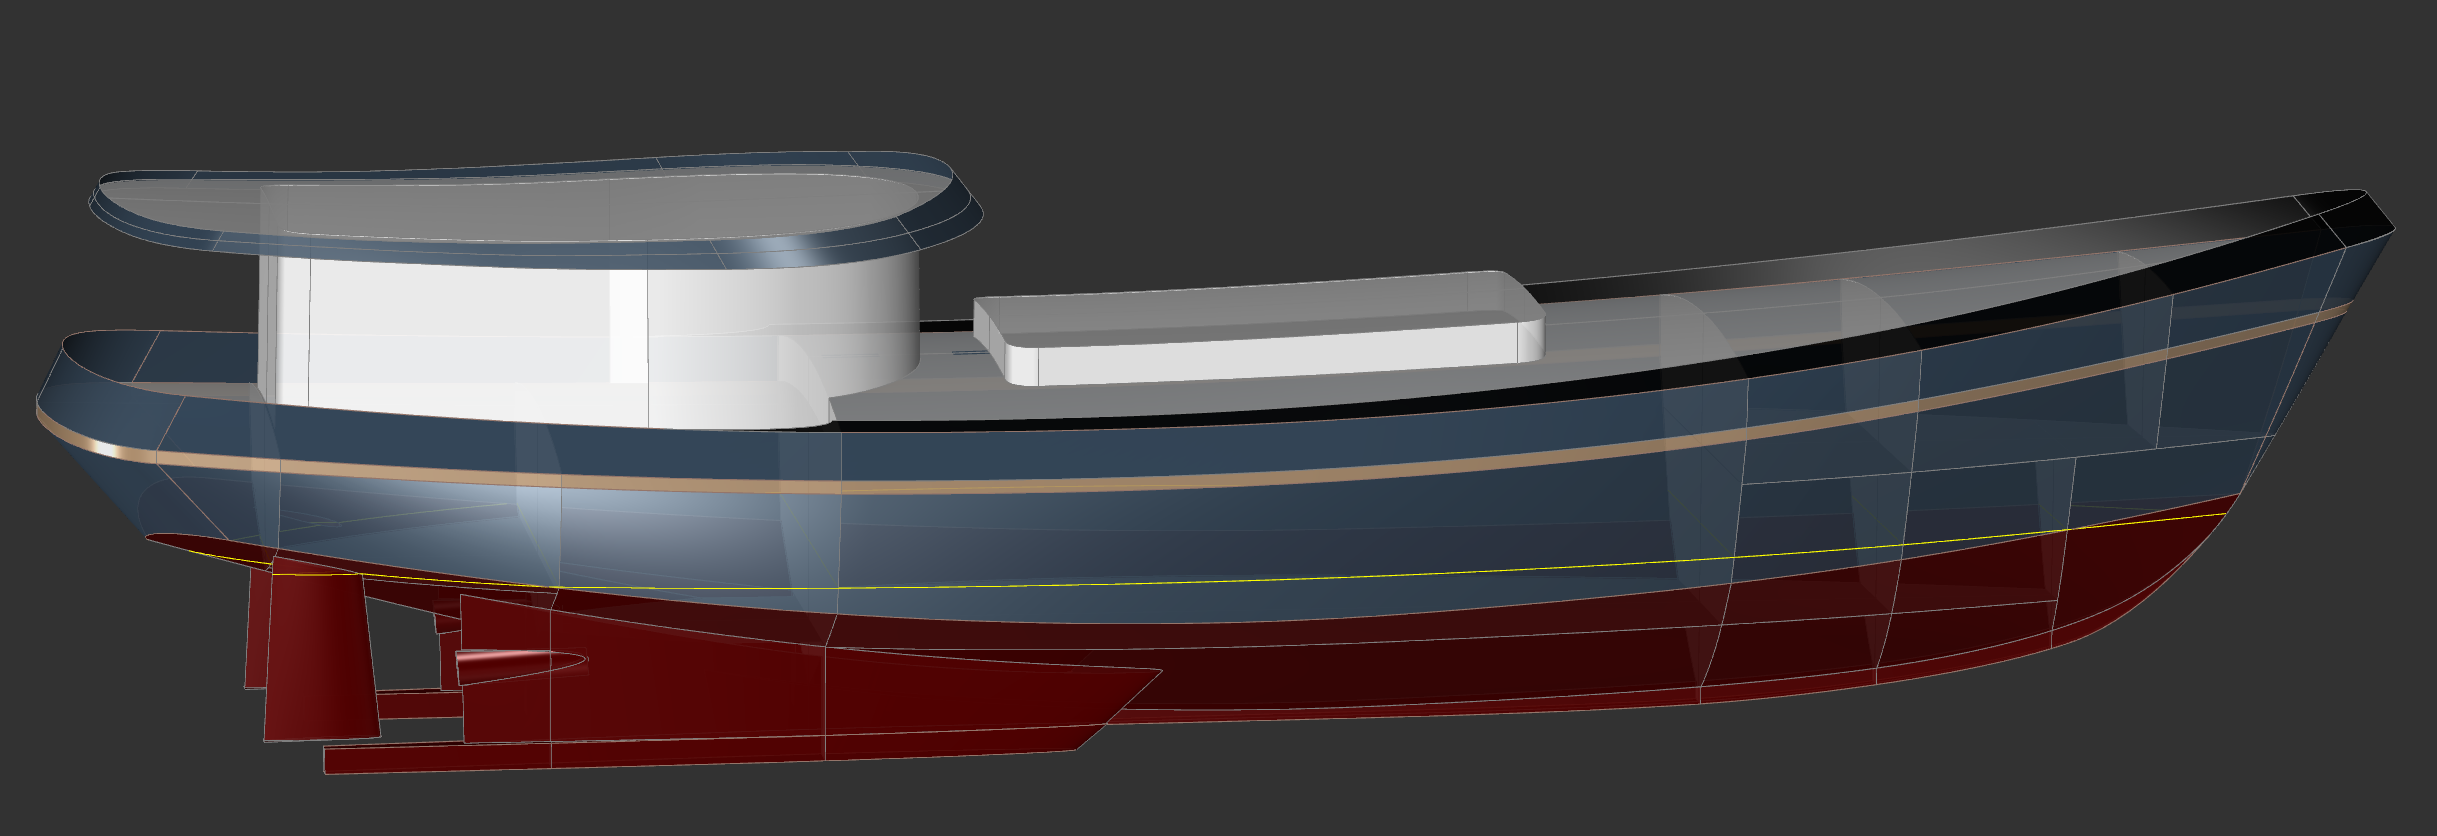 A 120' Motor Cargo Yacht - Kasten Marine Design, Inc.